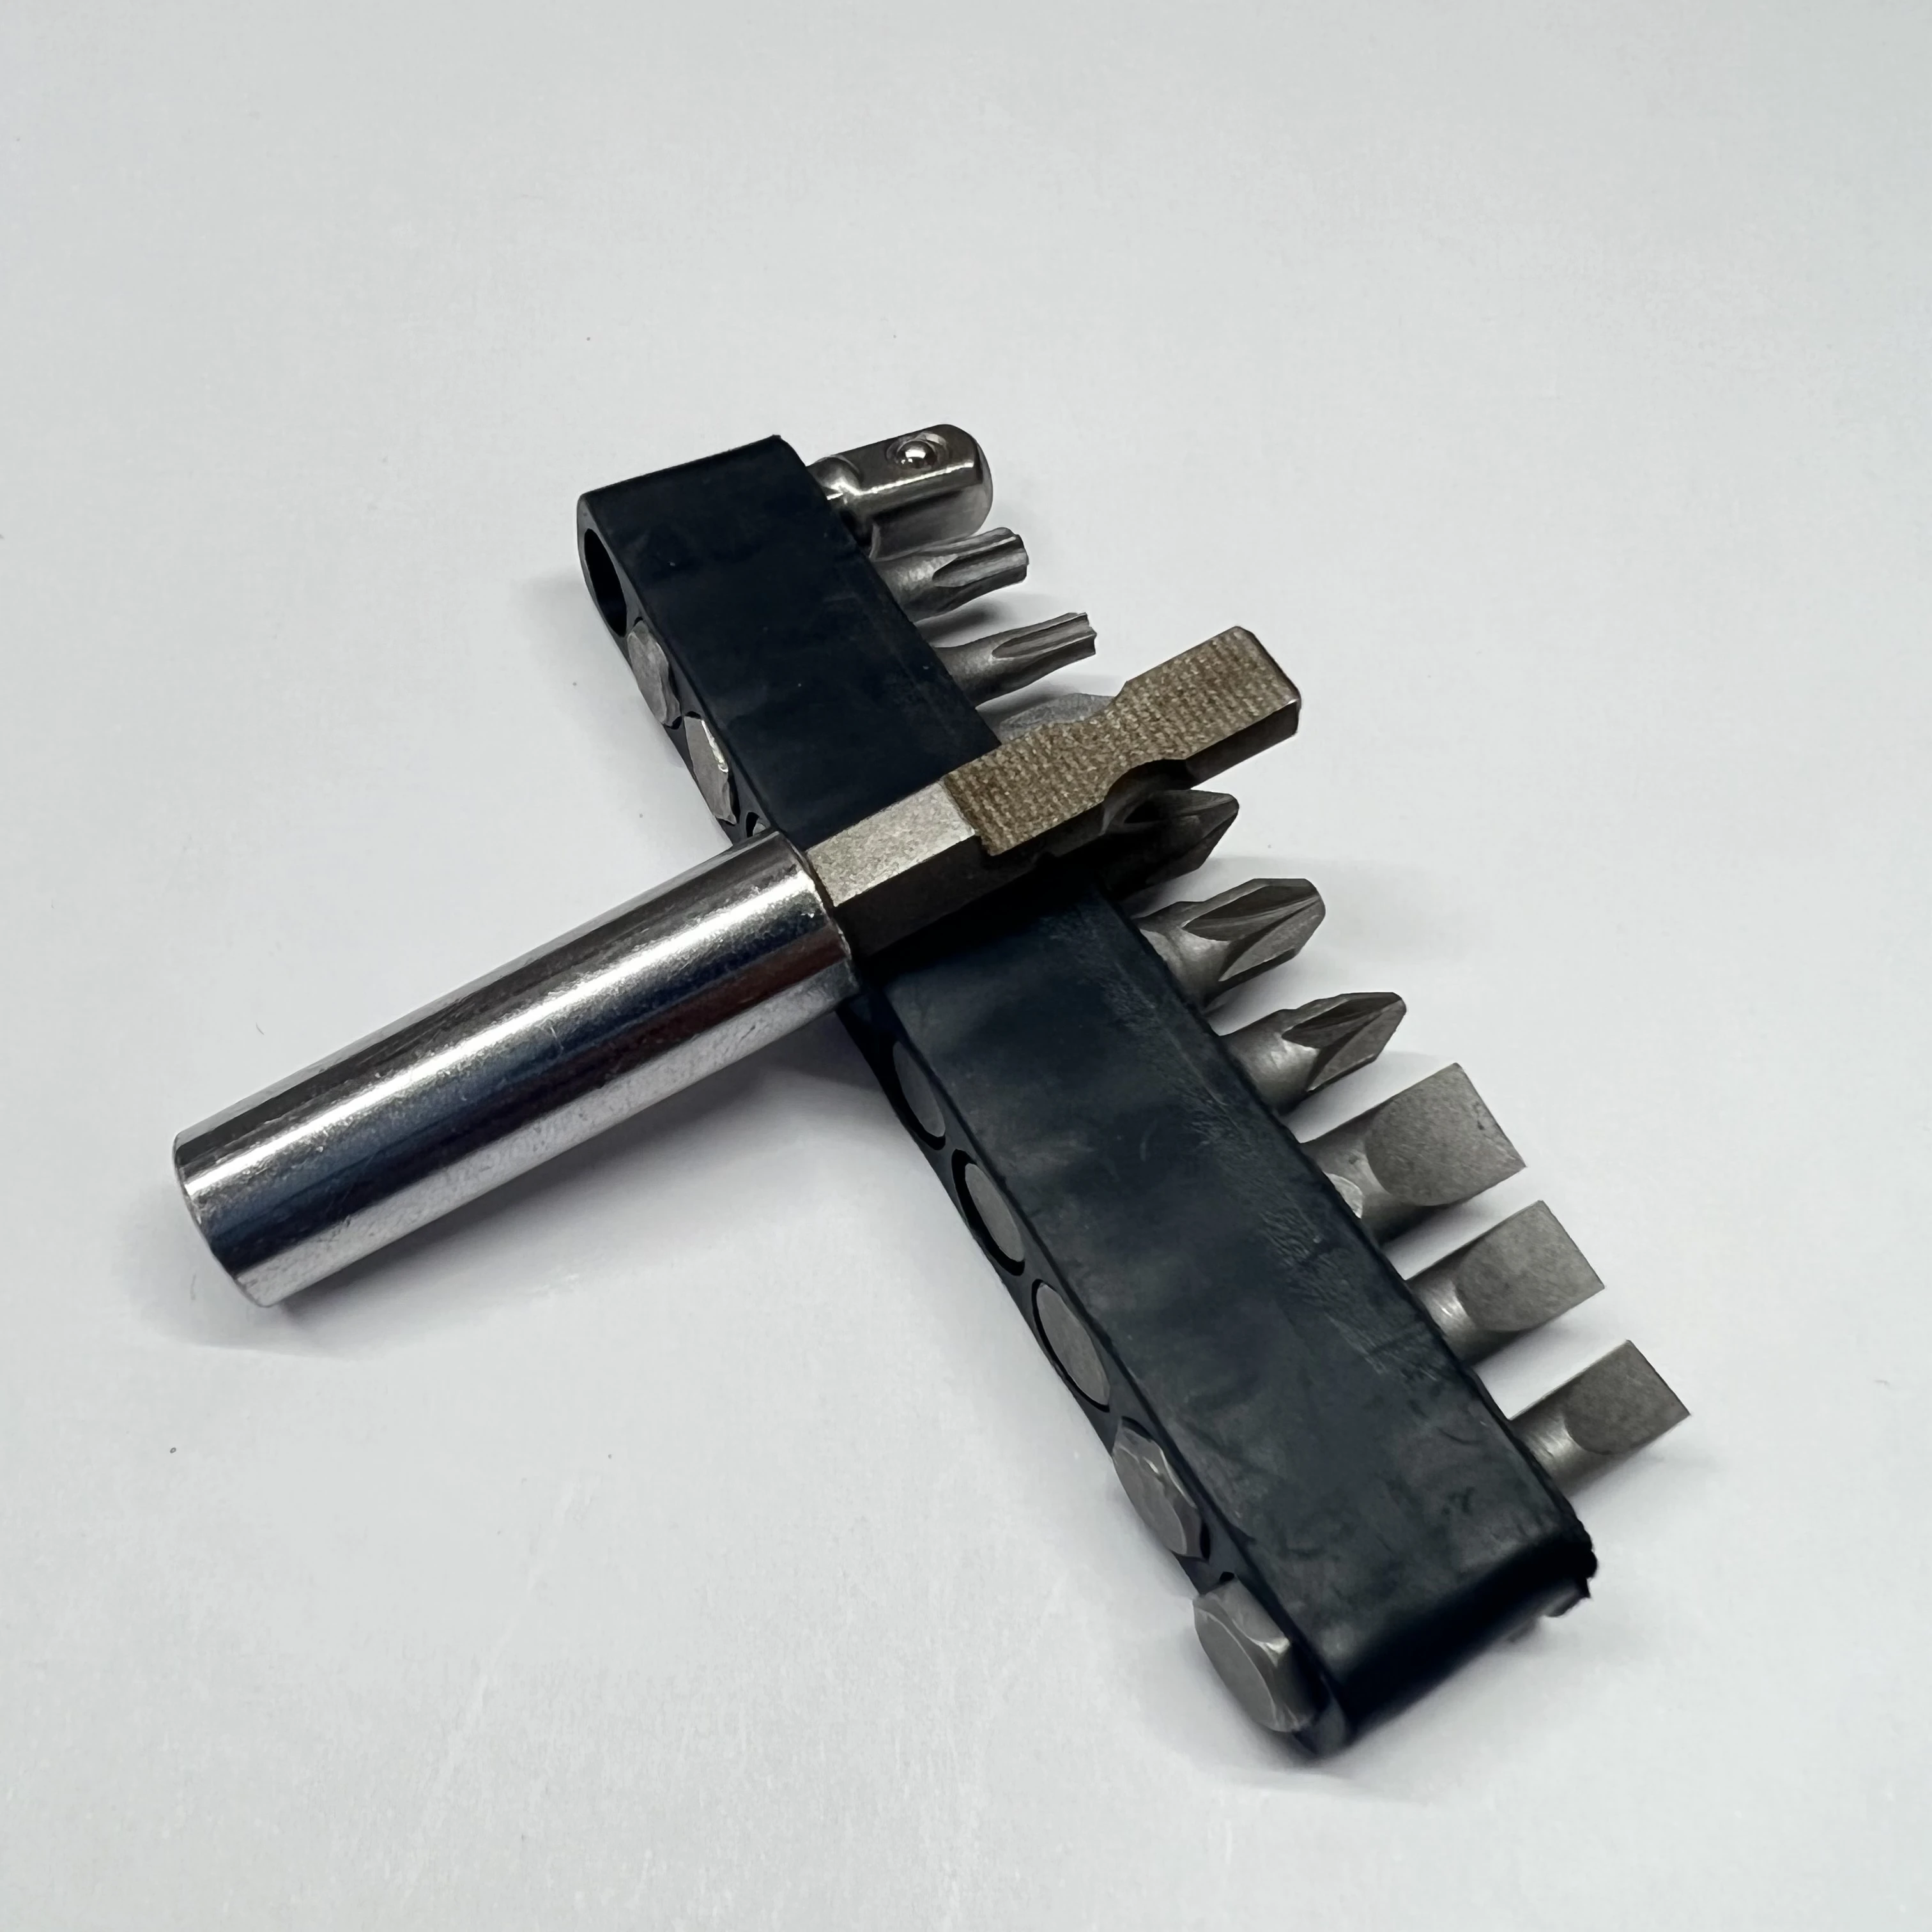 1 set For Leatherman ARC Wave TTI Signal Surge SkeleTool Screwdriver Extension Pole Adapter Bit Sleeve  CNC DIY Accessories